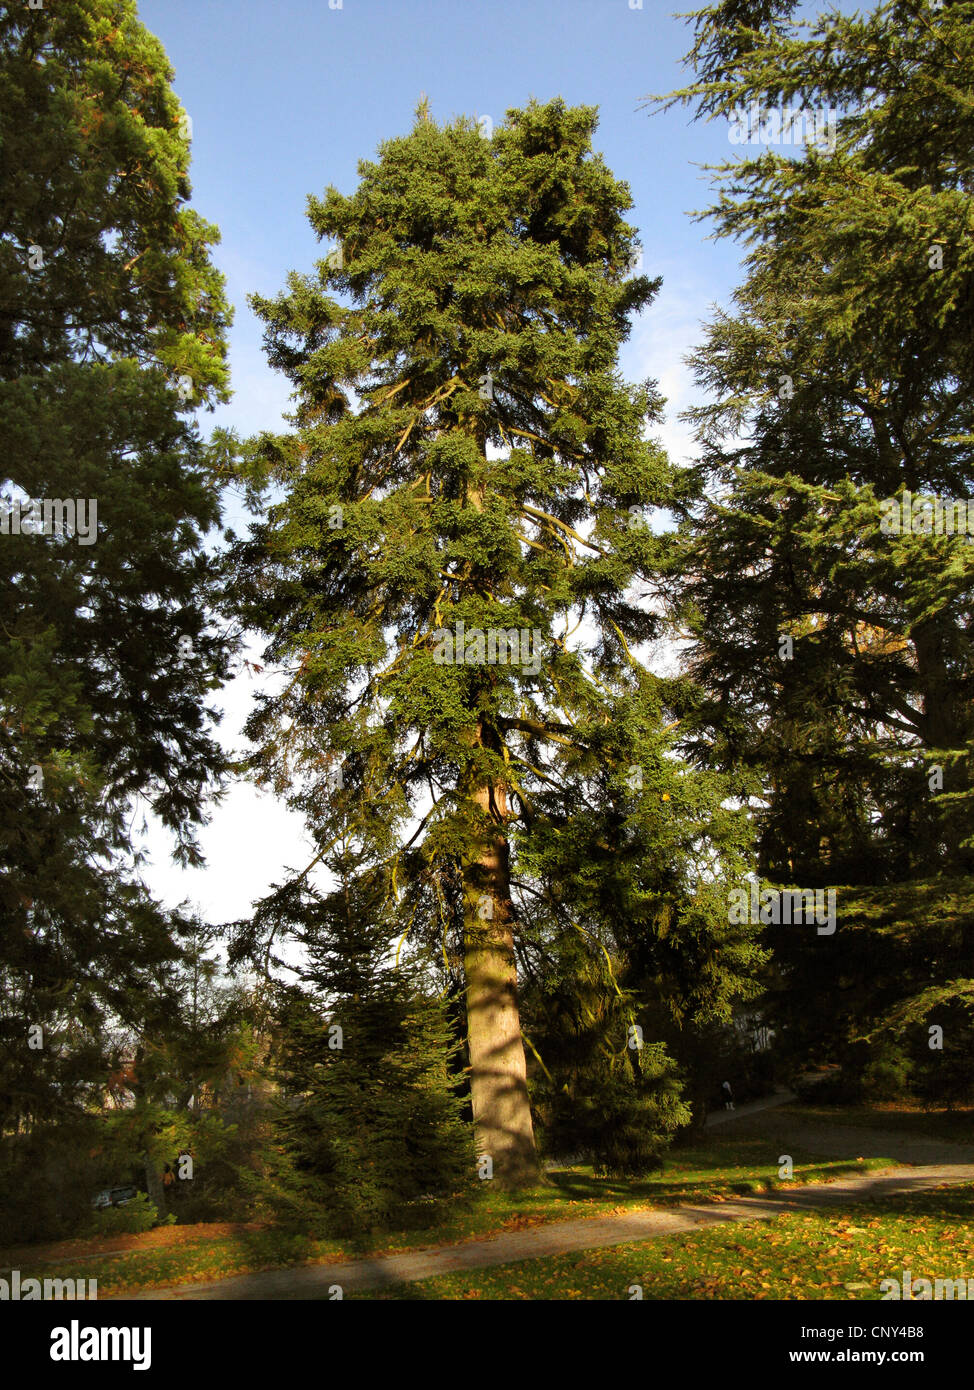 Spanish fir (Abies pinsapo), in a park Stock Photo